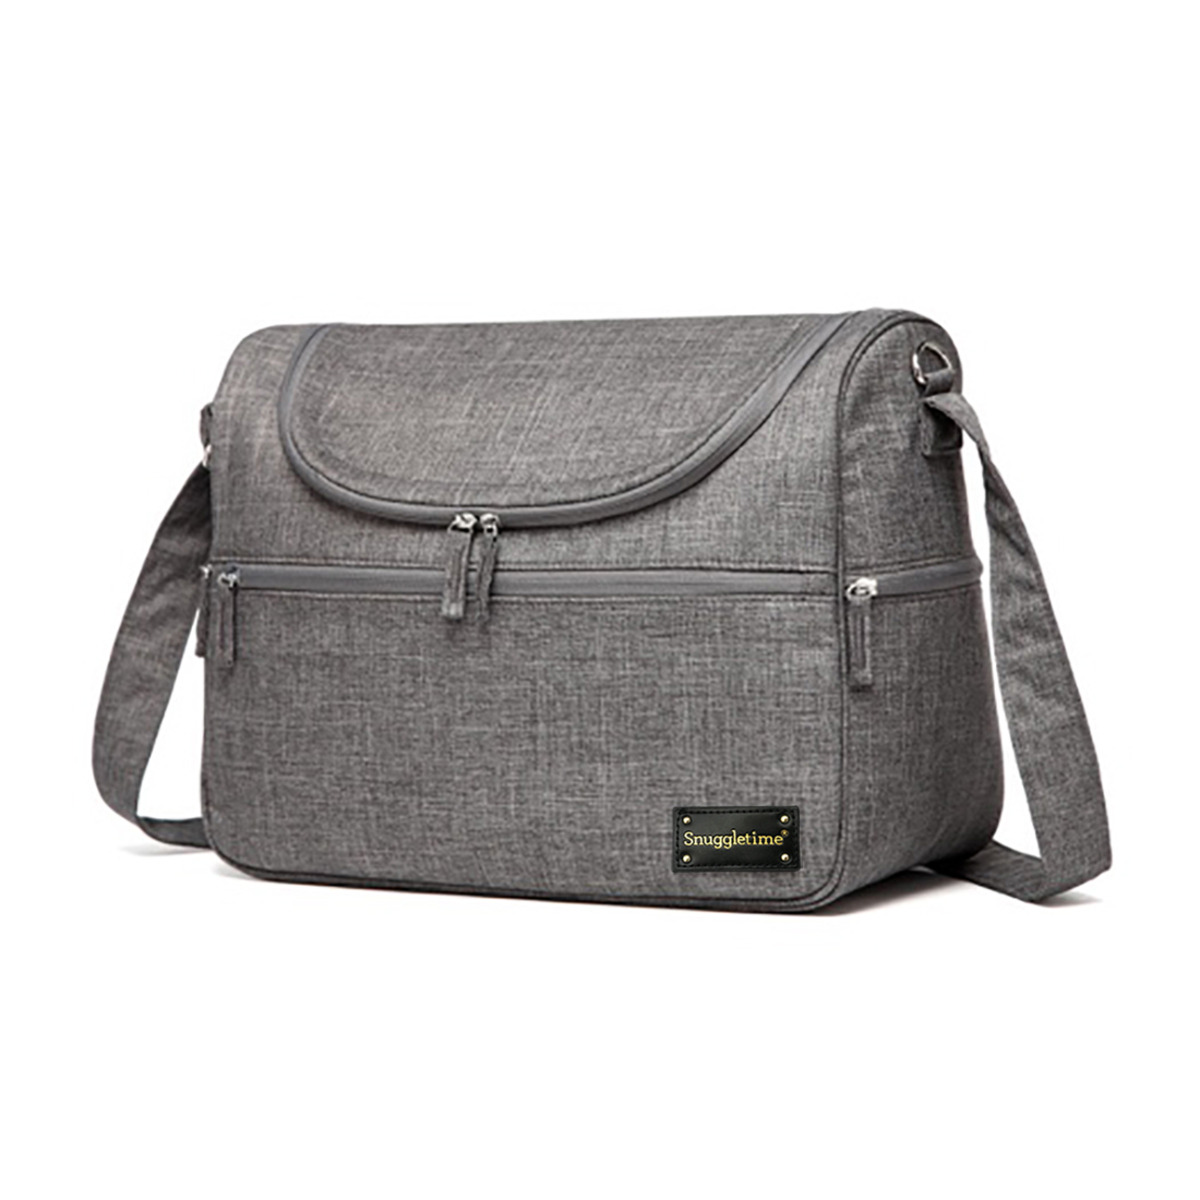 Snuggletime Nappy Bag - Classic Grey Travel Bag